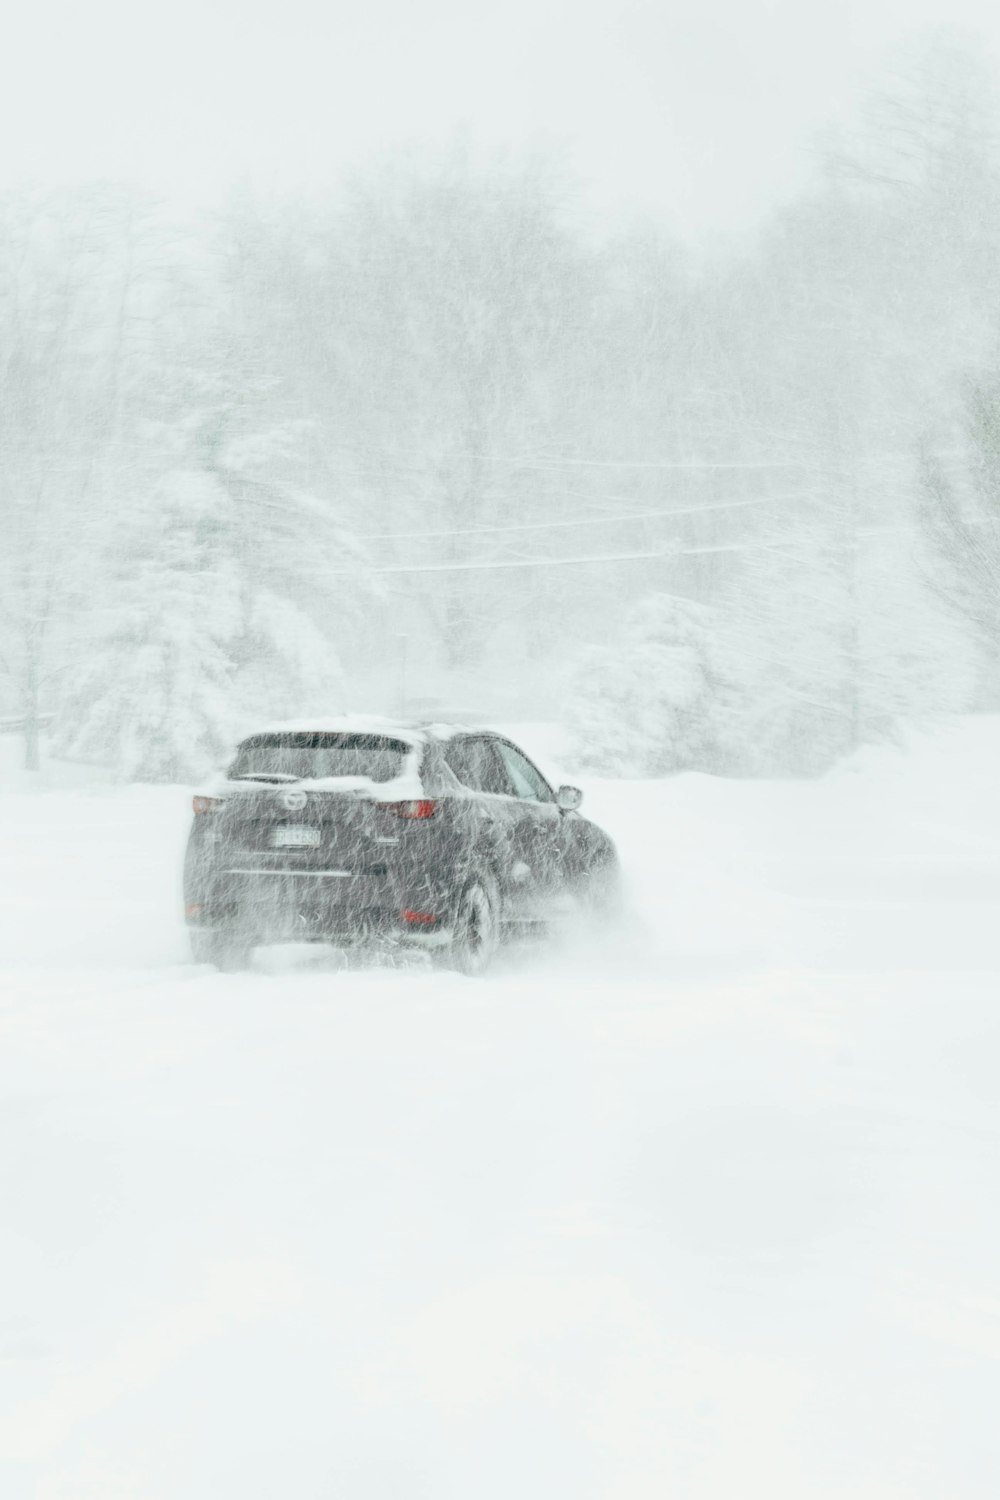 a car driving through a snow covered field